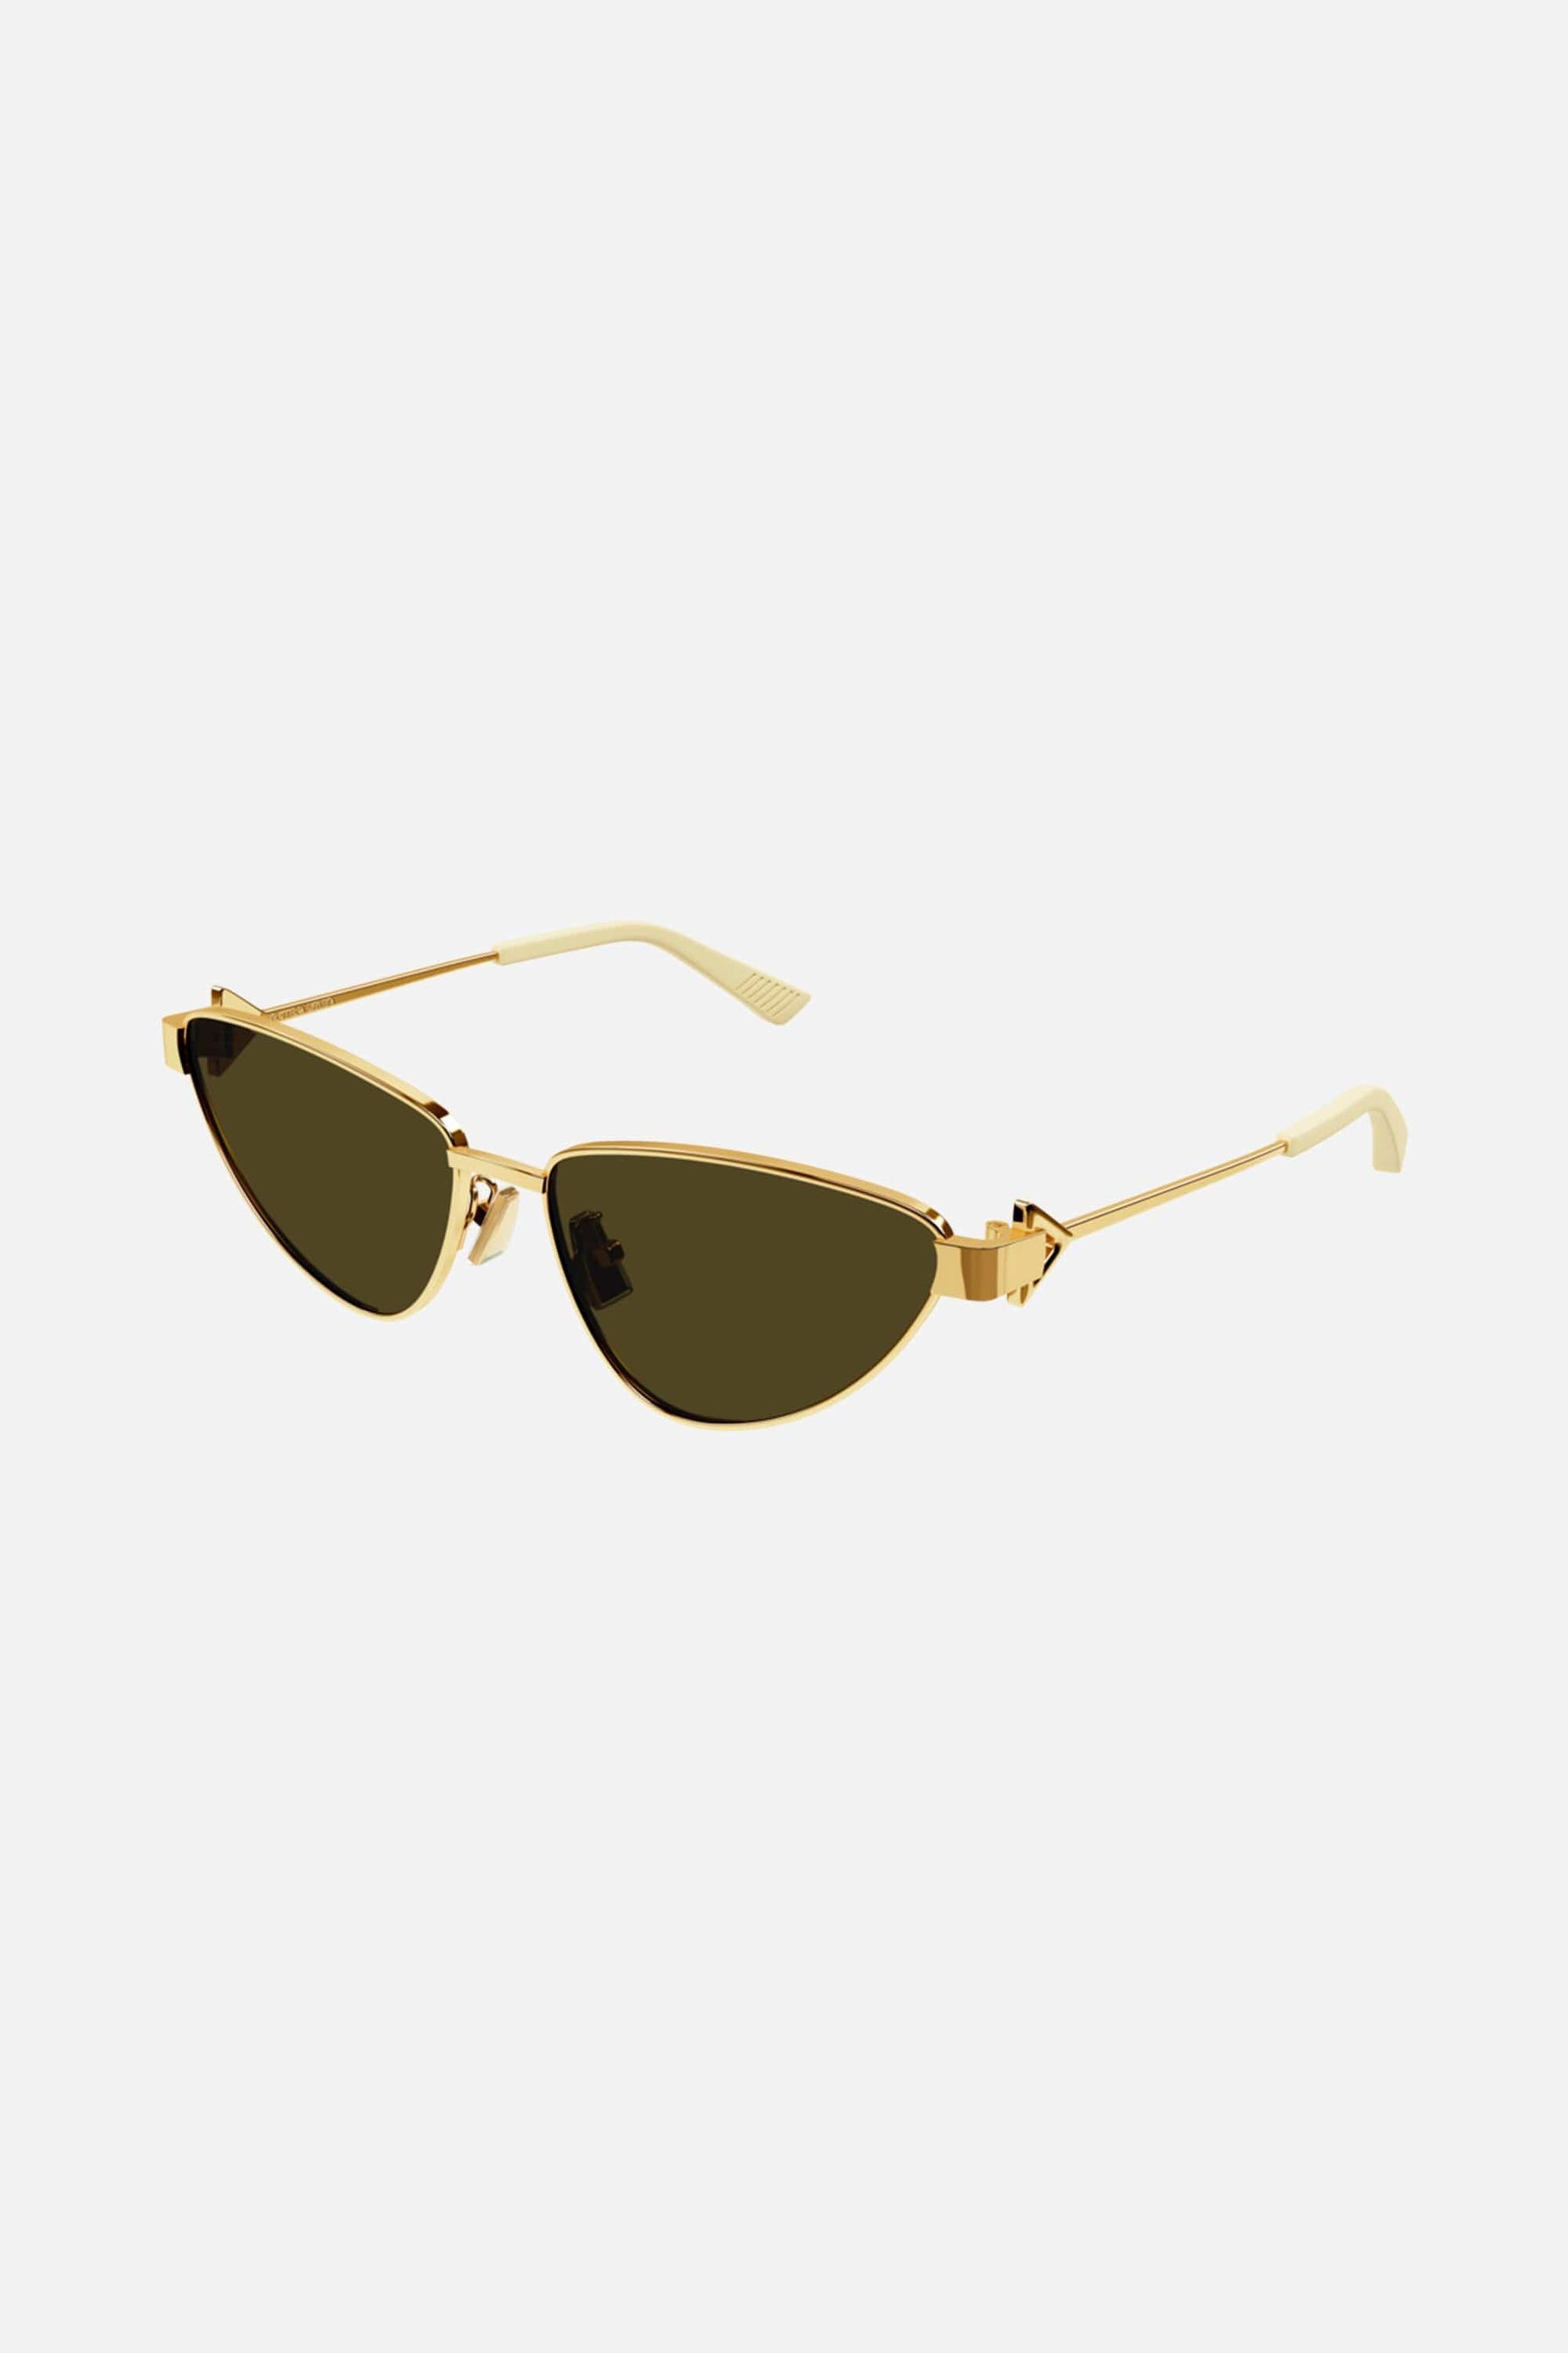 Bottega Veneta cat eye metal gold sunglasses - Eyewear Club